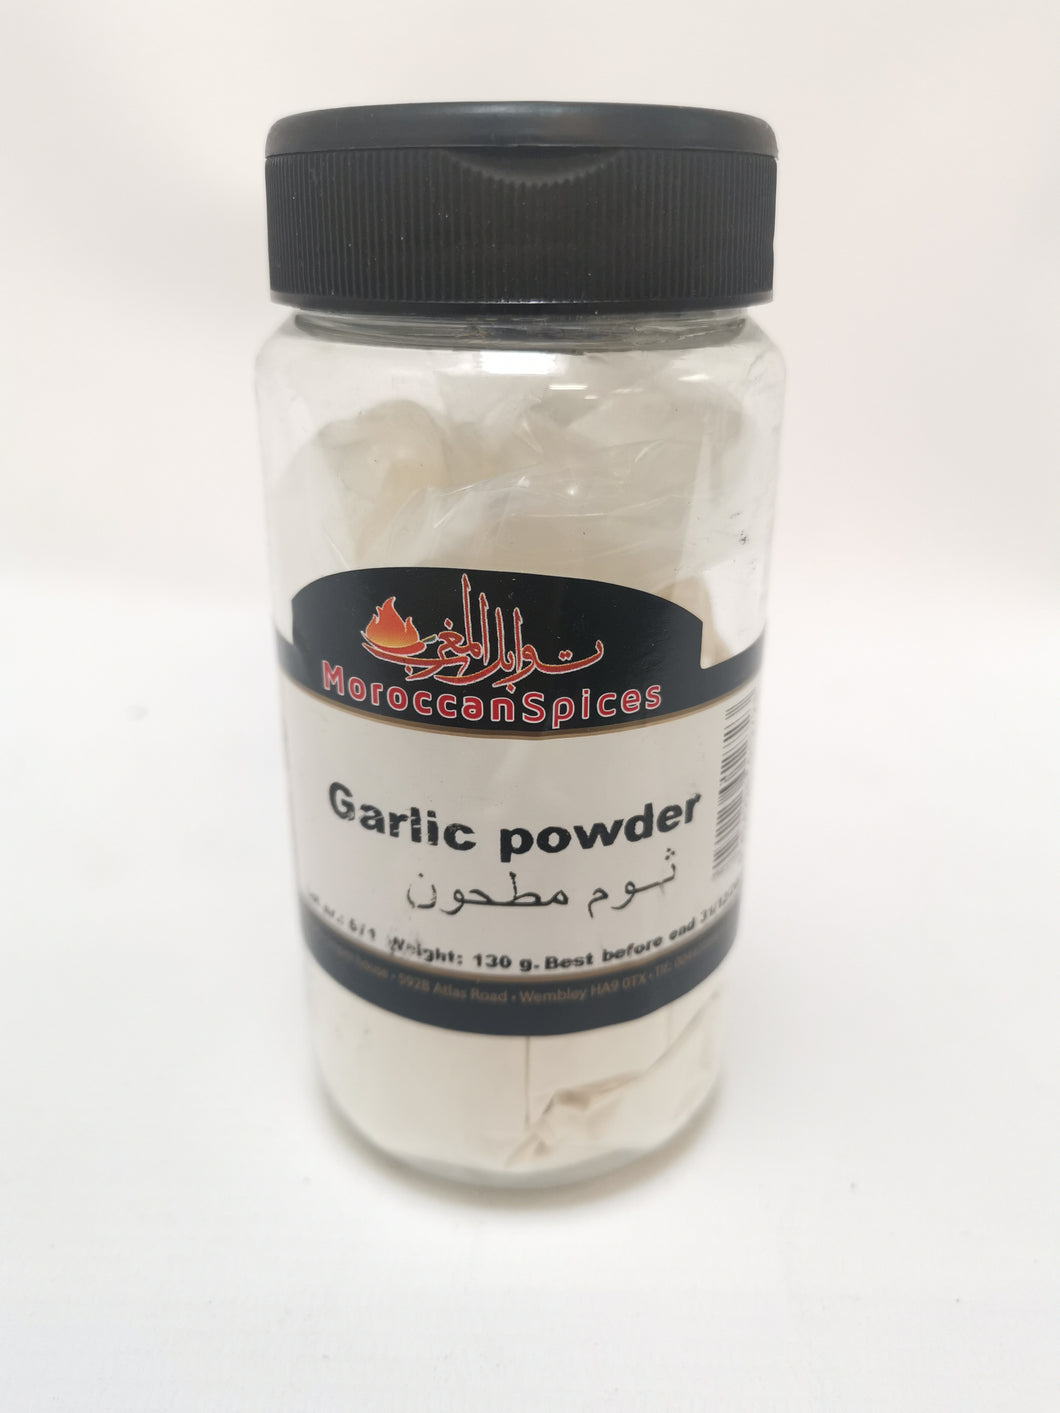 Moroccan Spices Garlic Powder 130g